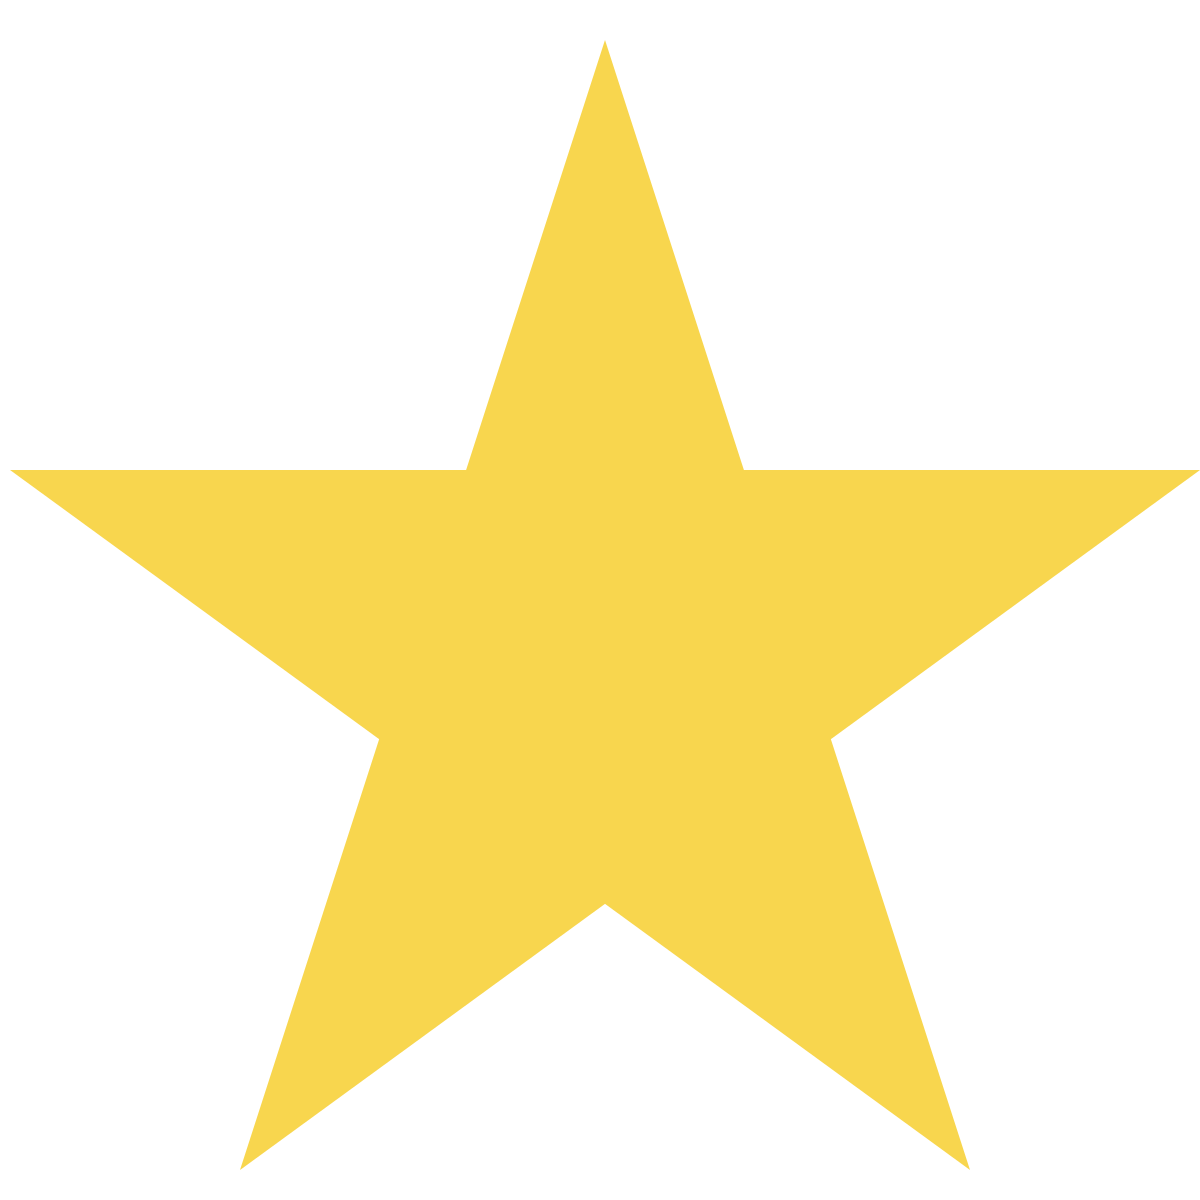 File:Gold Star.svg - Wikipedia